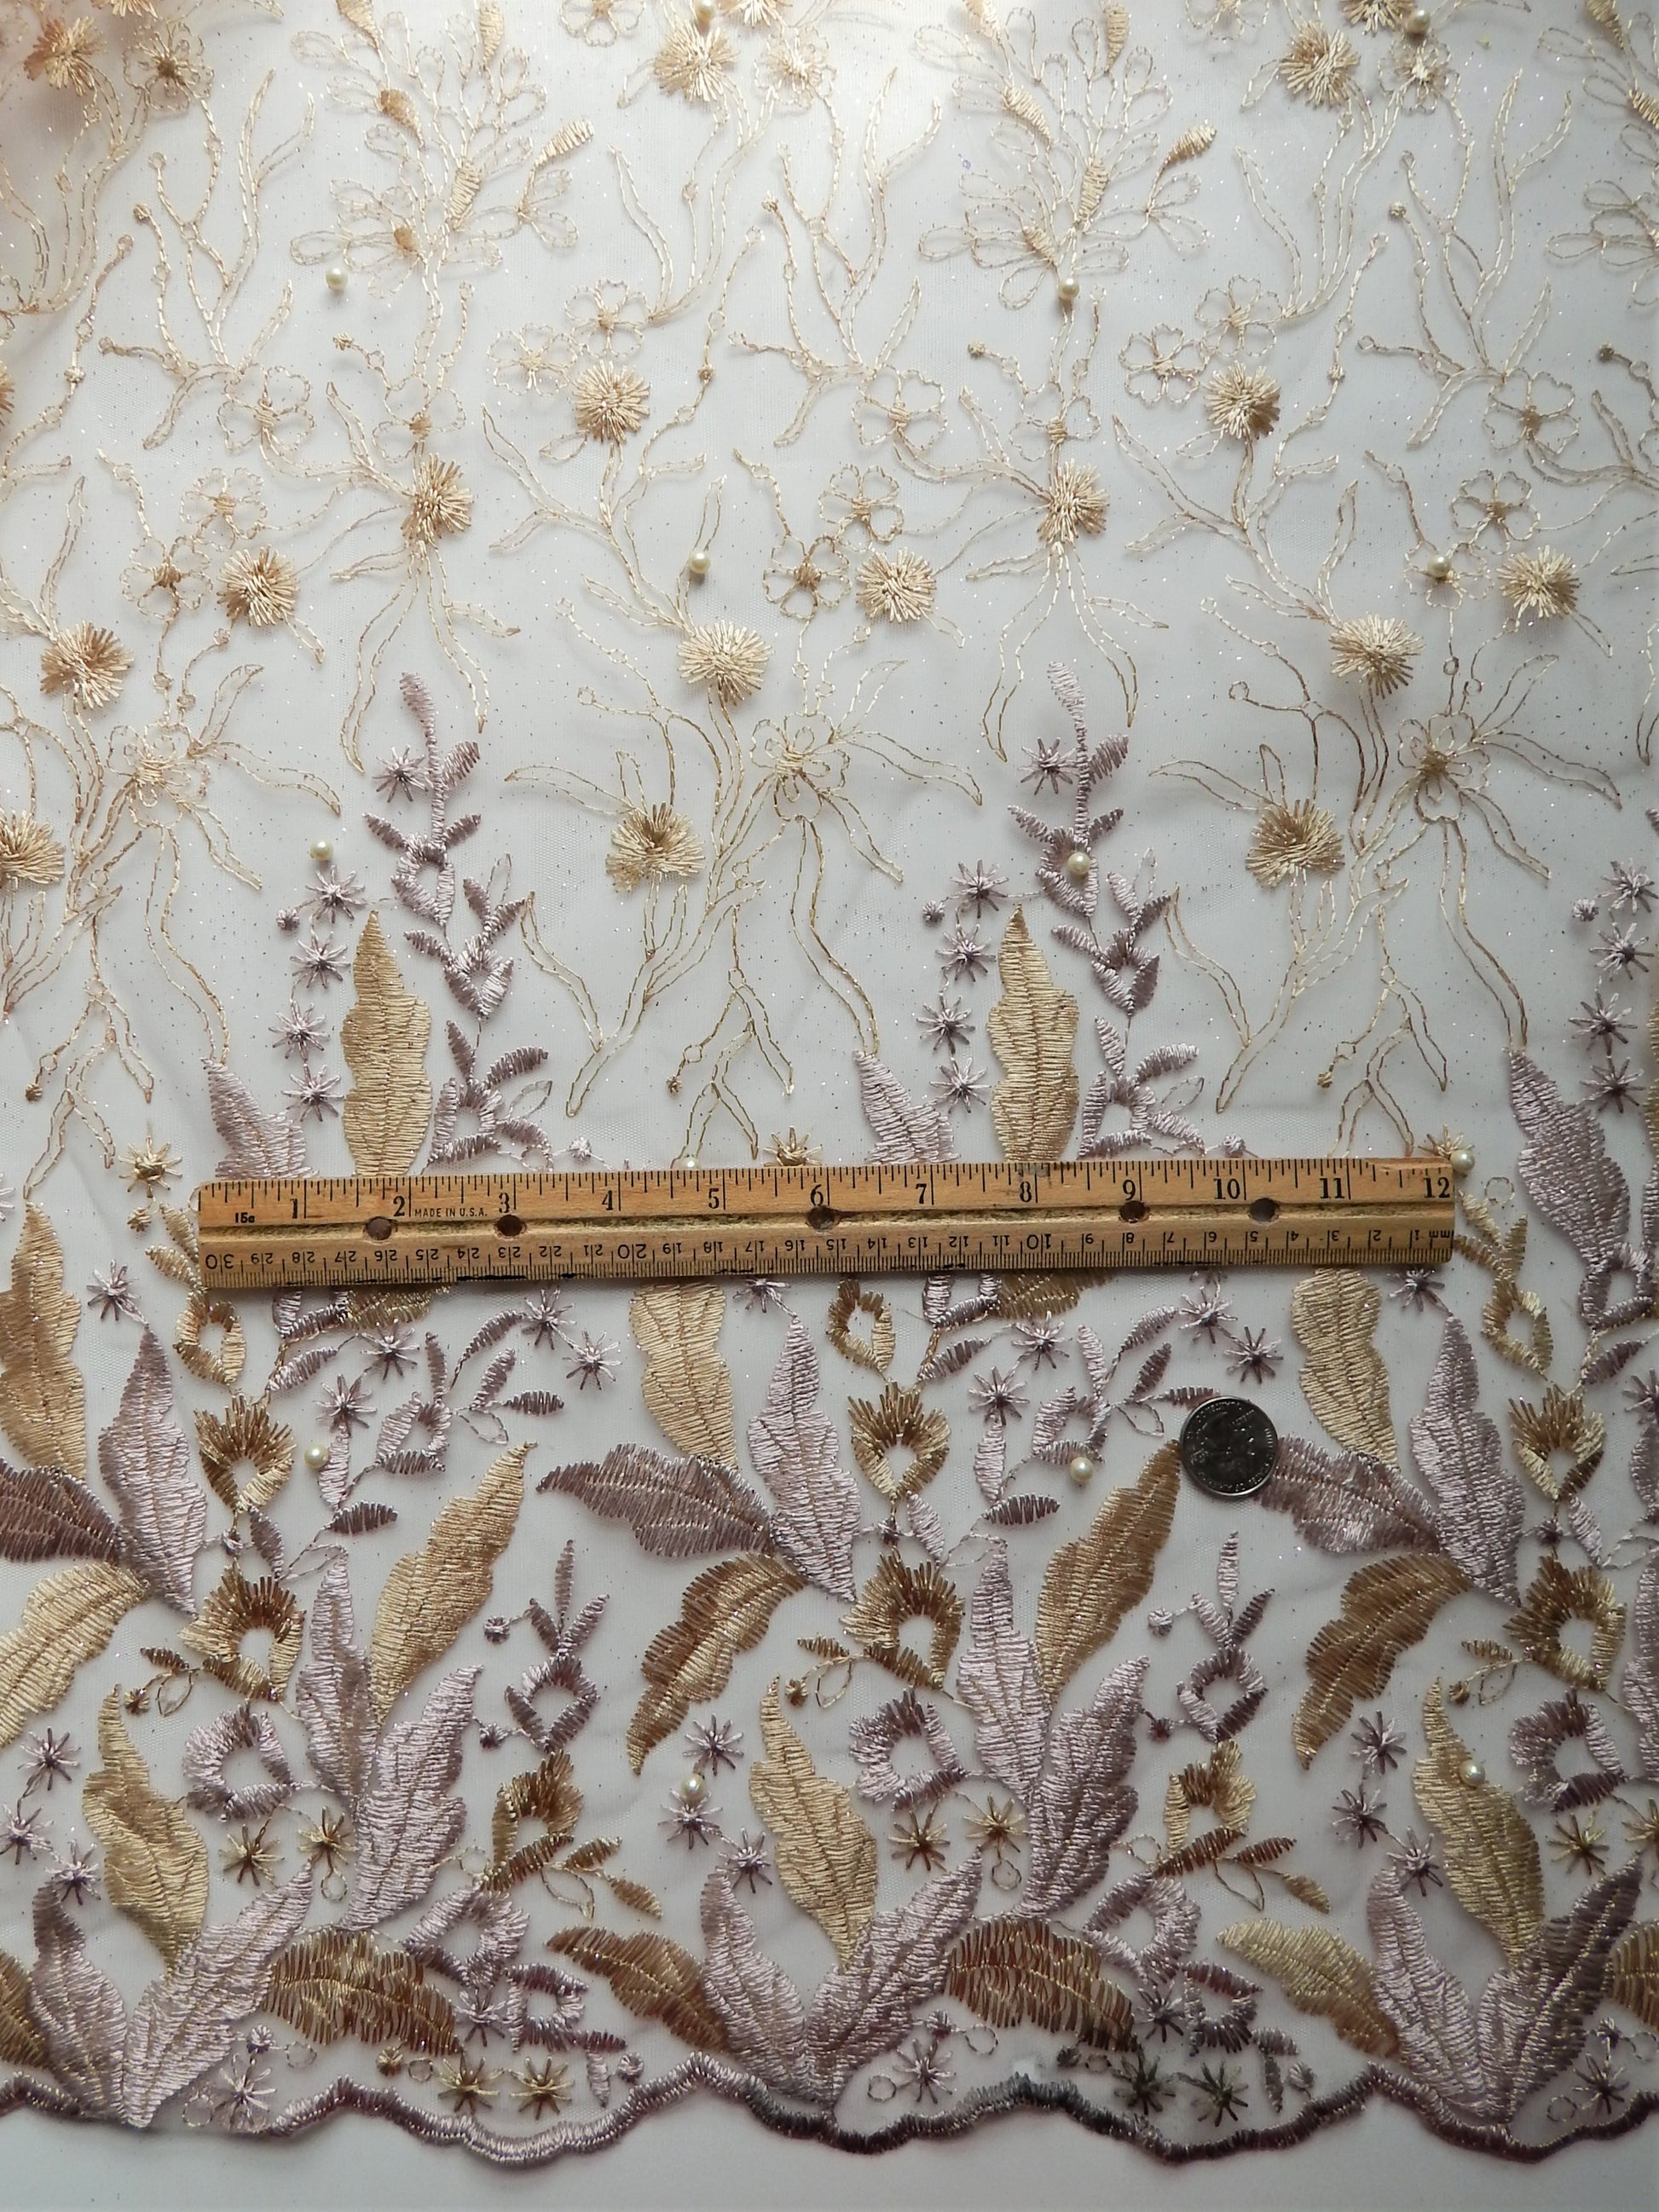 Metallic gold beaded lace fabric